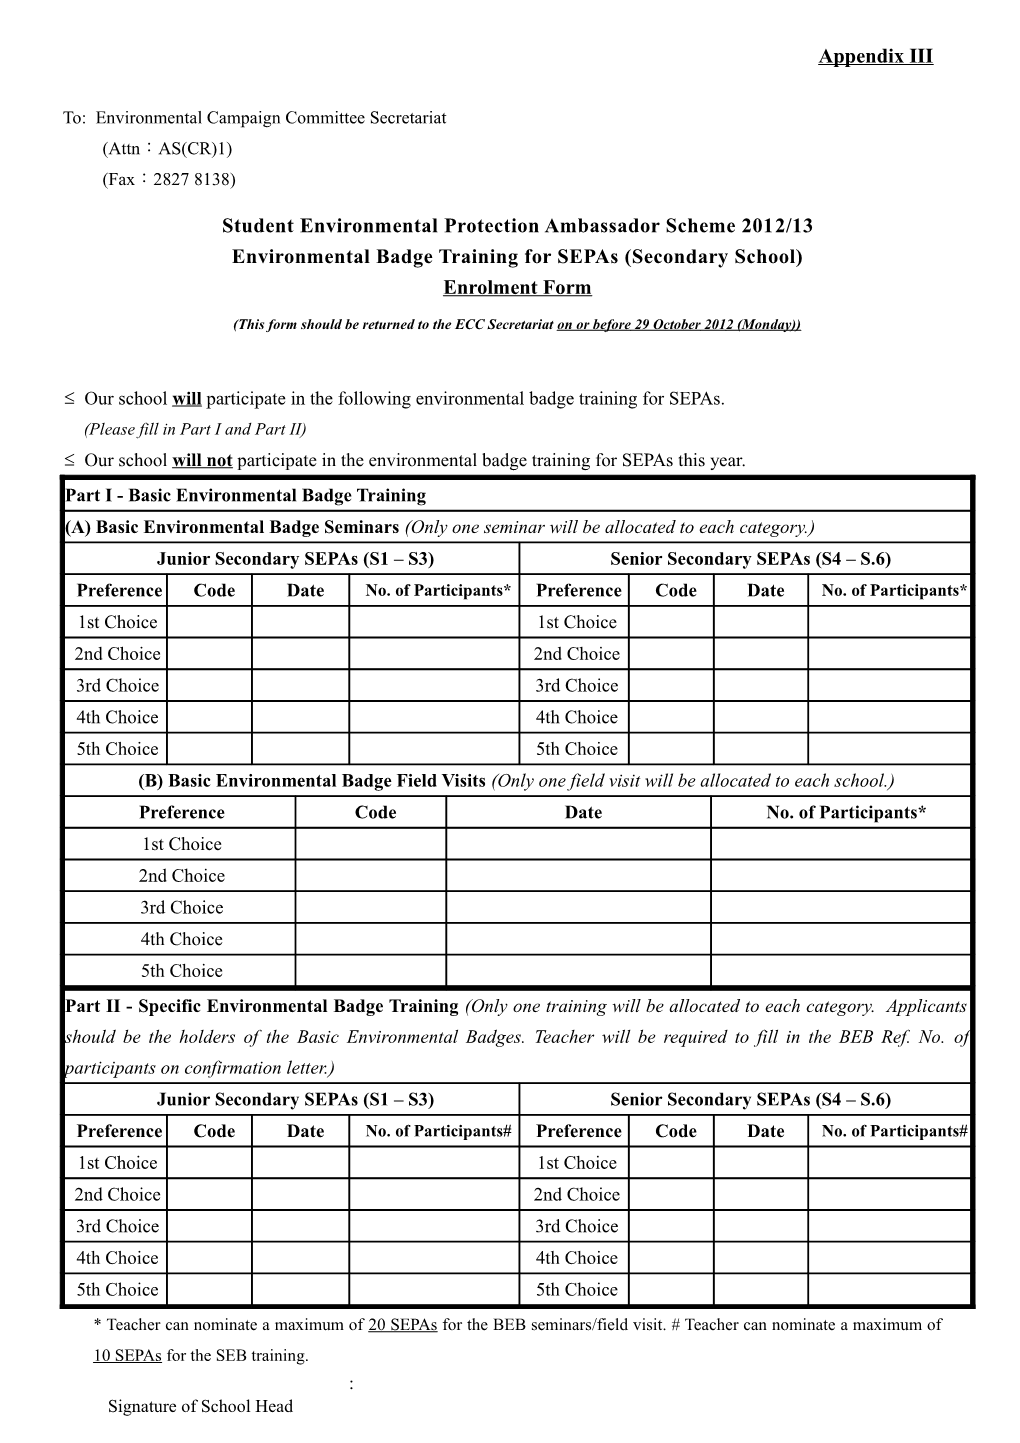 Student Environmental Protection Ambassador Scheme 2012/13